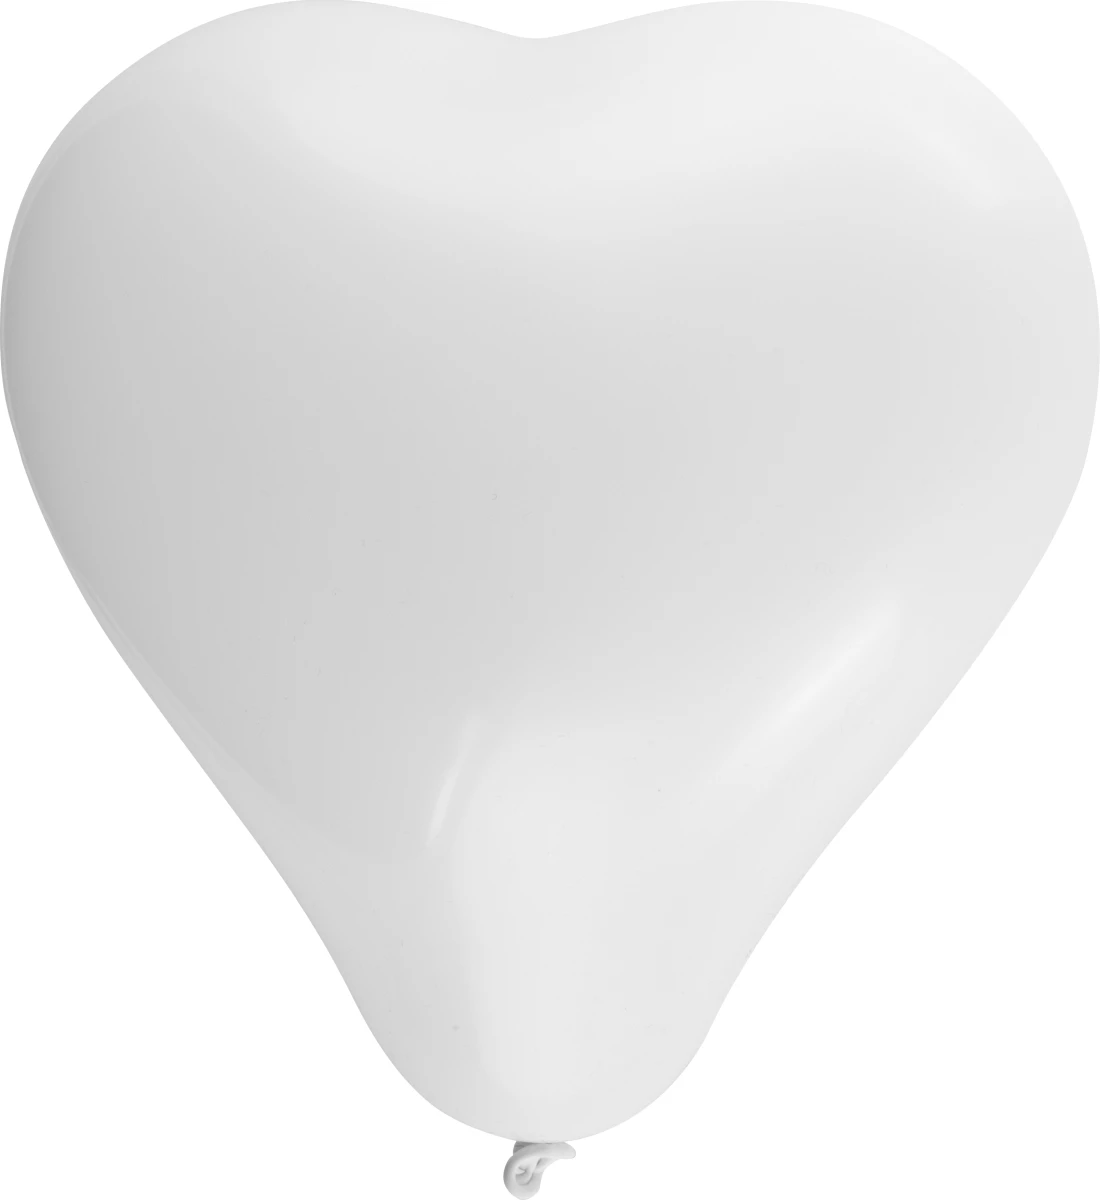 Luftballons weiße Herzen, 6er Beutel